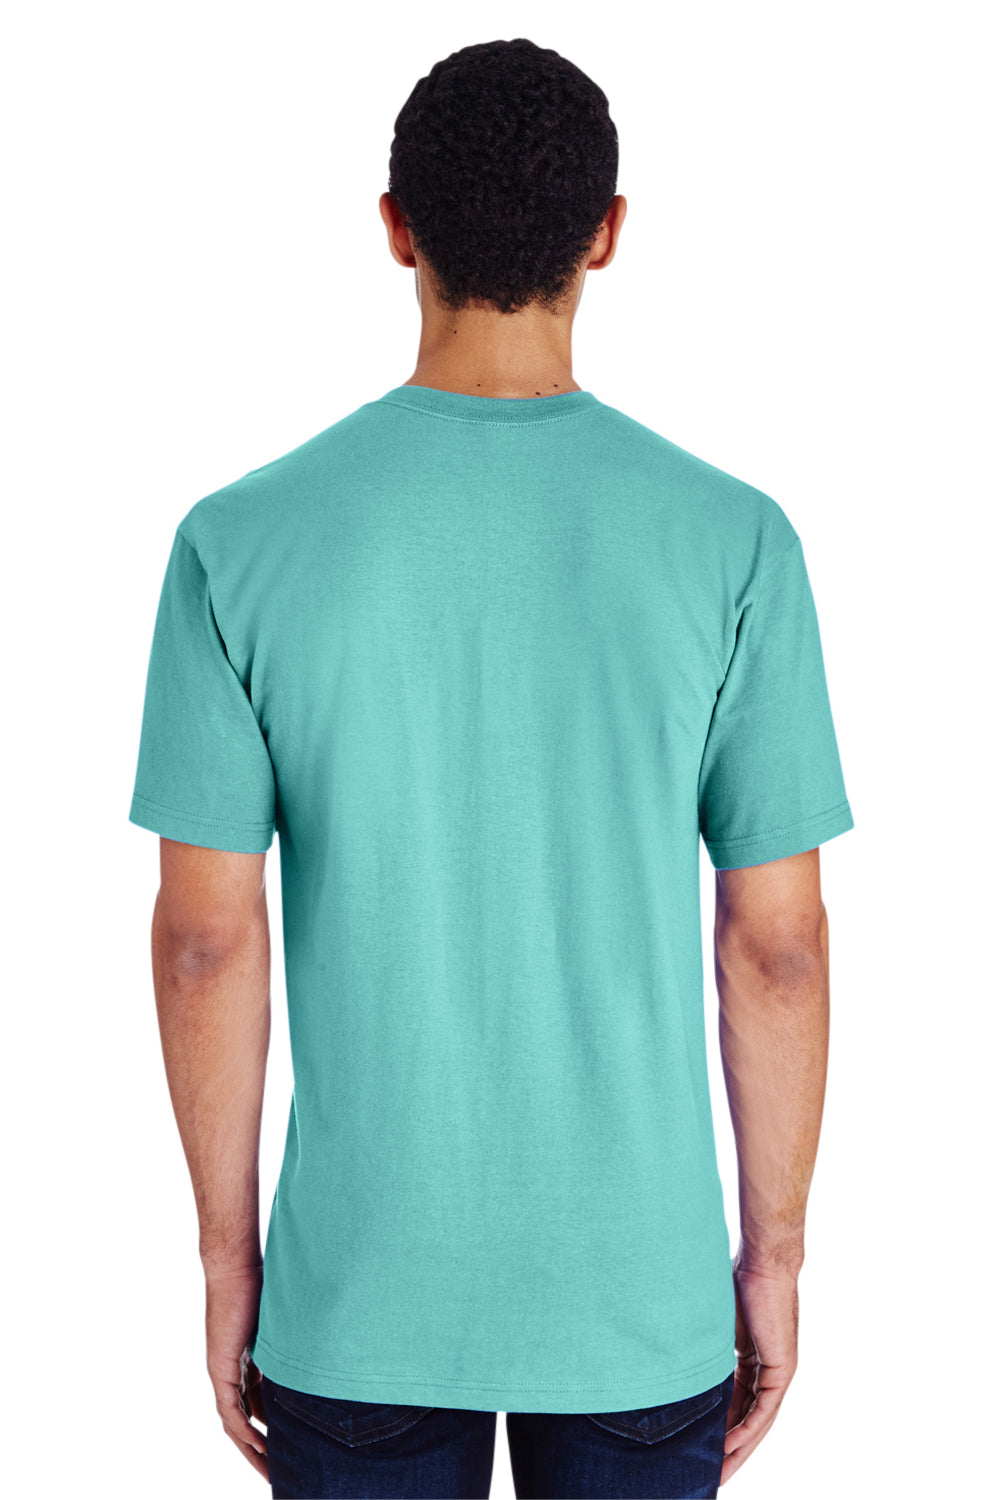 Gildan H000 Mens Hammer Short Sleeve Crewneck T-Shirt Seafoam Green Back